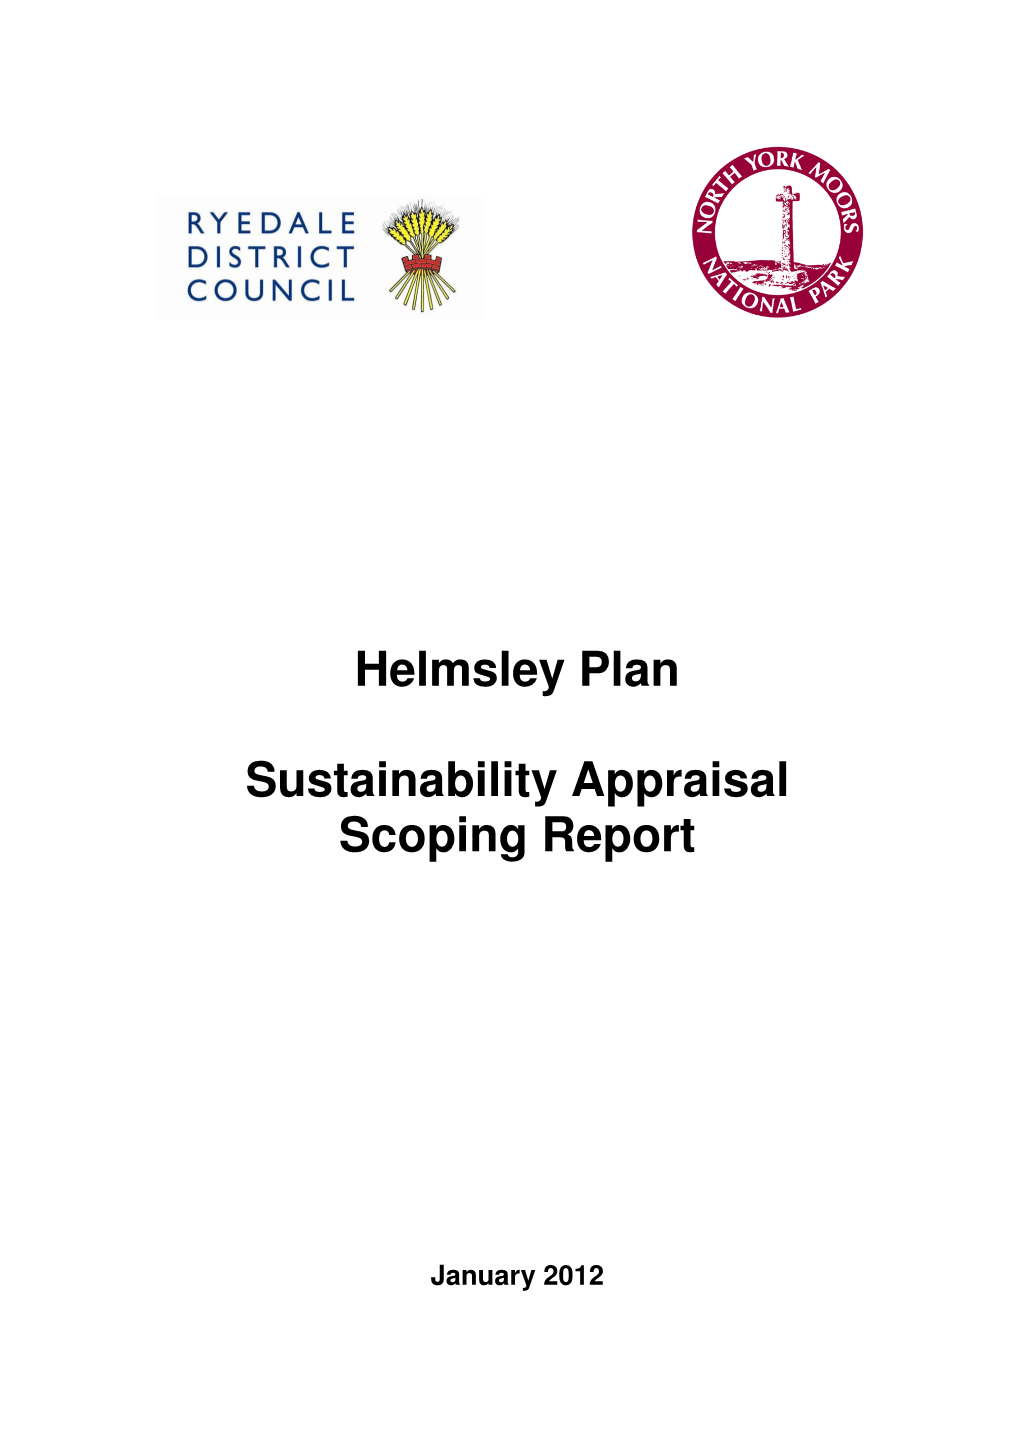 Helmsley Plan Sustainability Appraisal Scoping Report